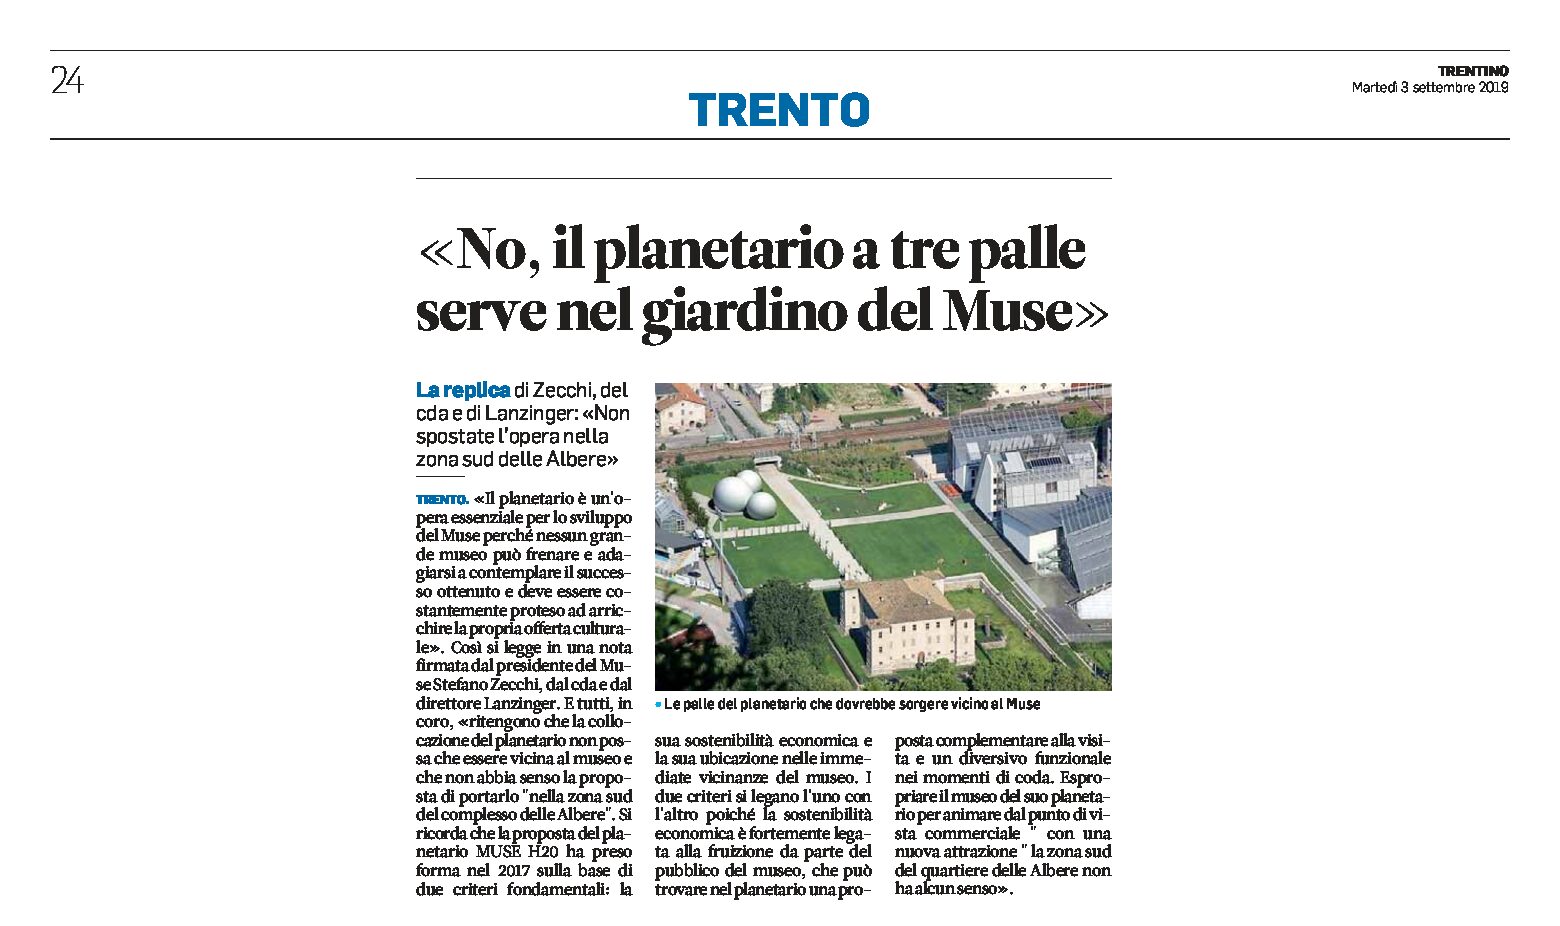 Trento, Planetario: Zecchi, Cda e Lanzinger “serve nel giardino del Muse”